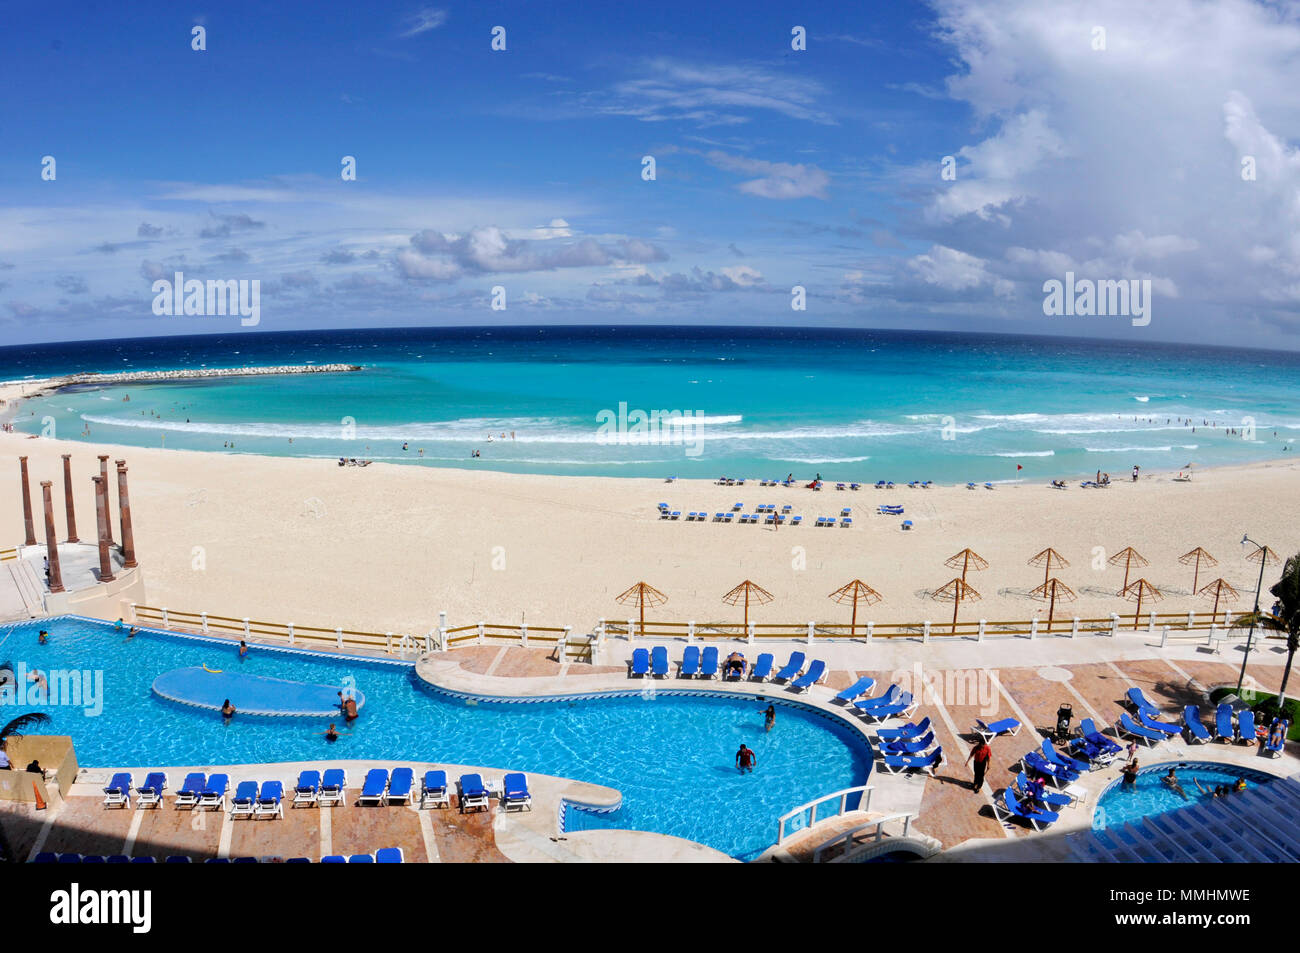 Pool at a beachfront resort in tropical Cancun, Yucatan, Mexico, Caribbean Sea Stock Photo